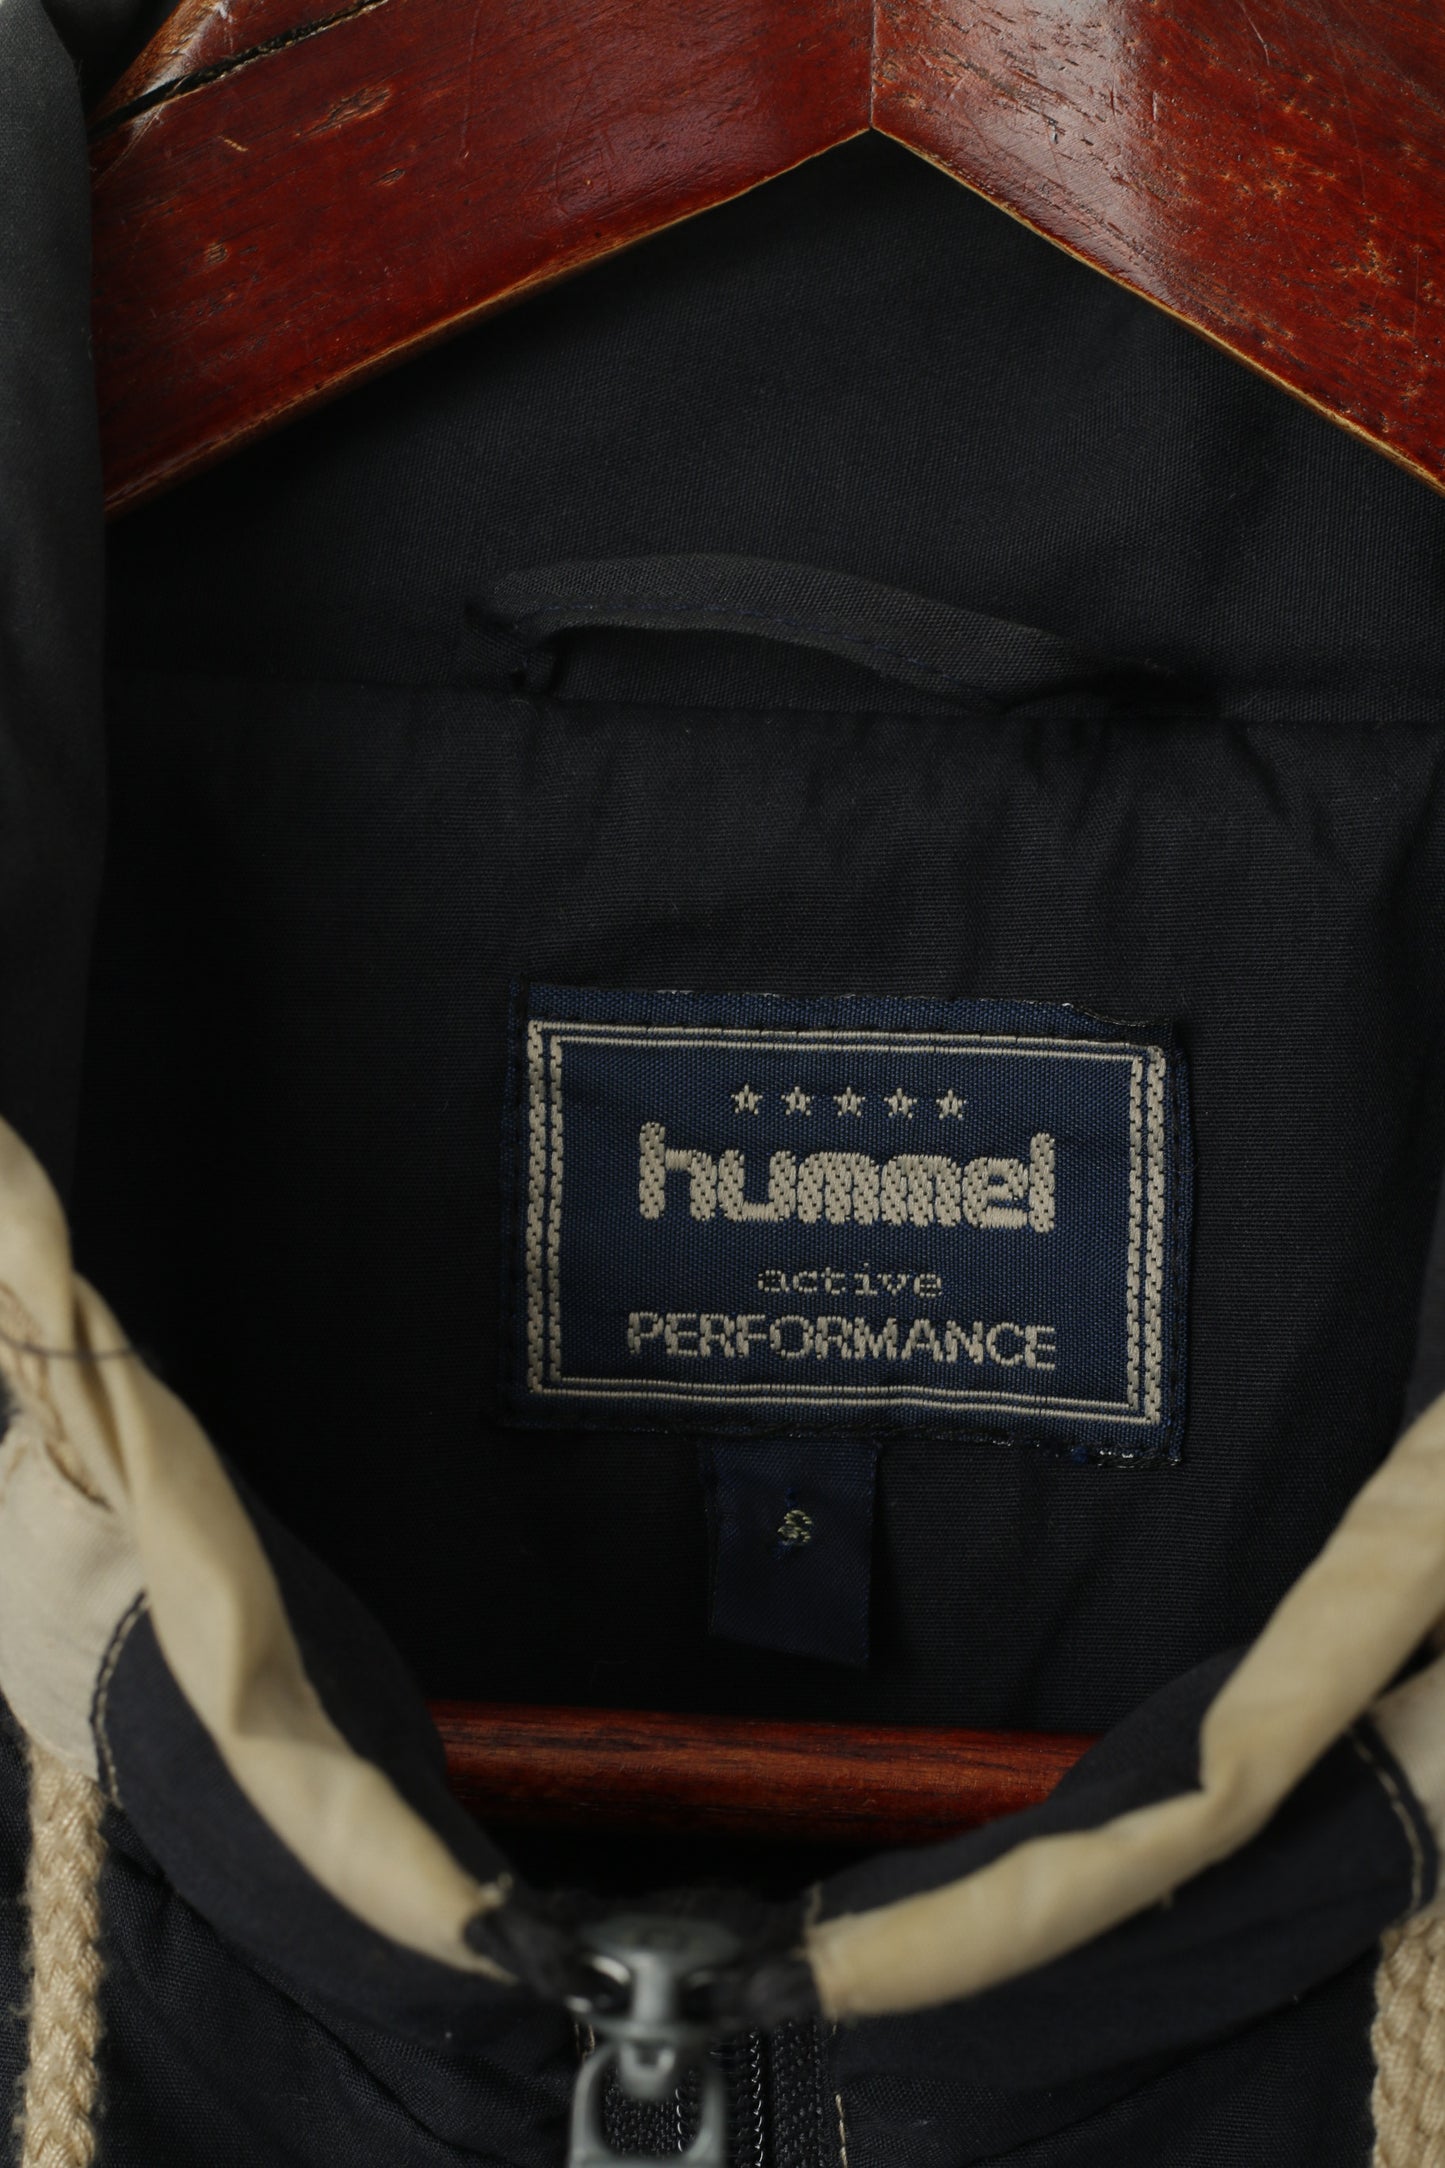 Hummel Men S Jacket Navy Lightweight Bomber Vintage 90s  England Sportswear Top